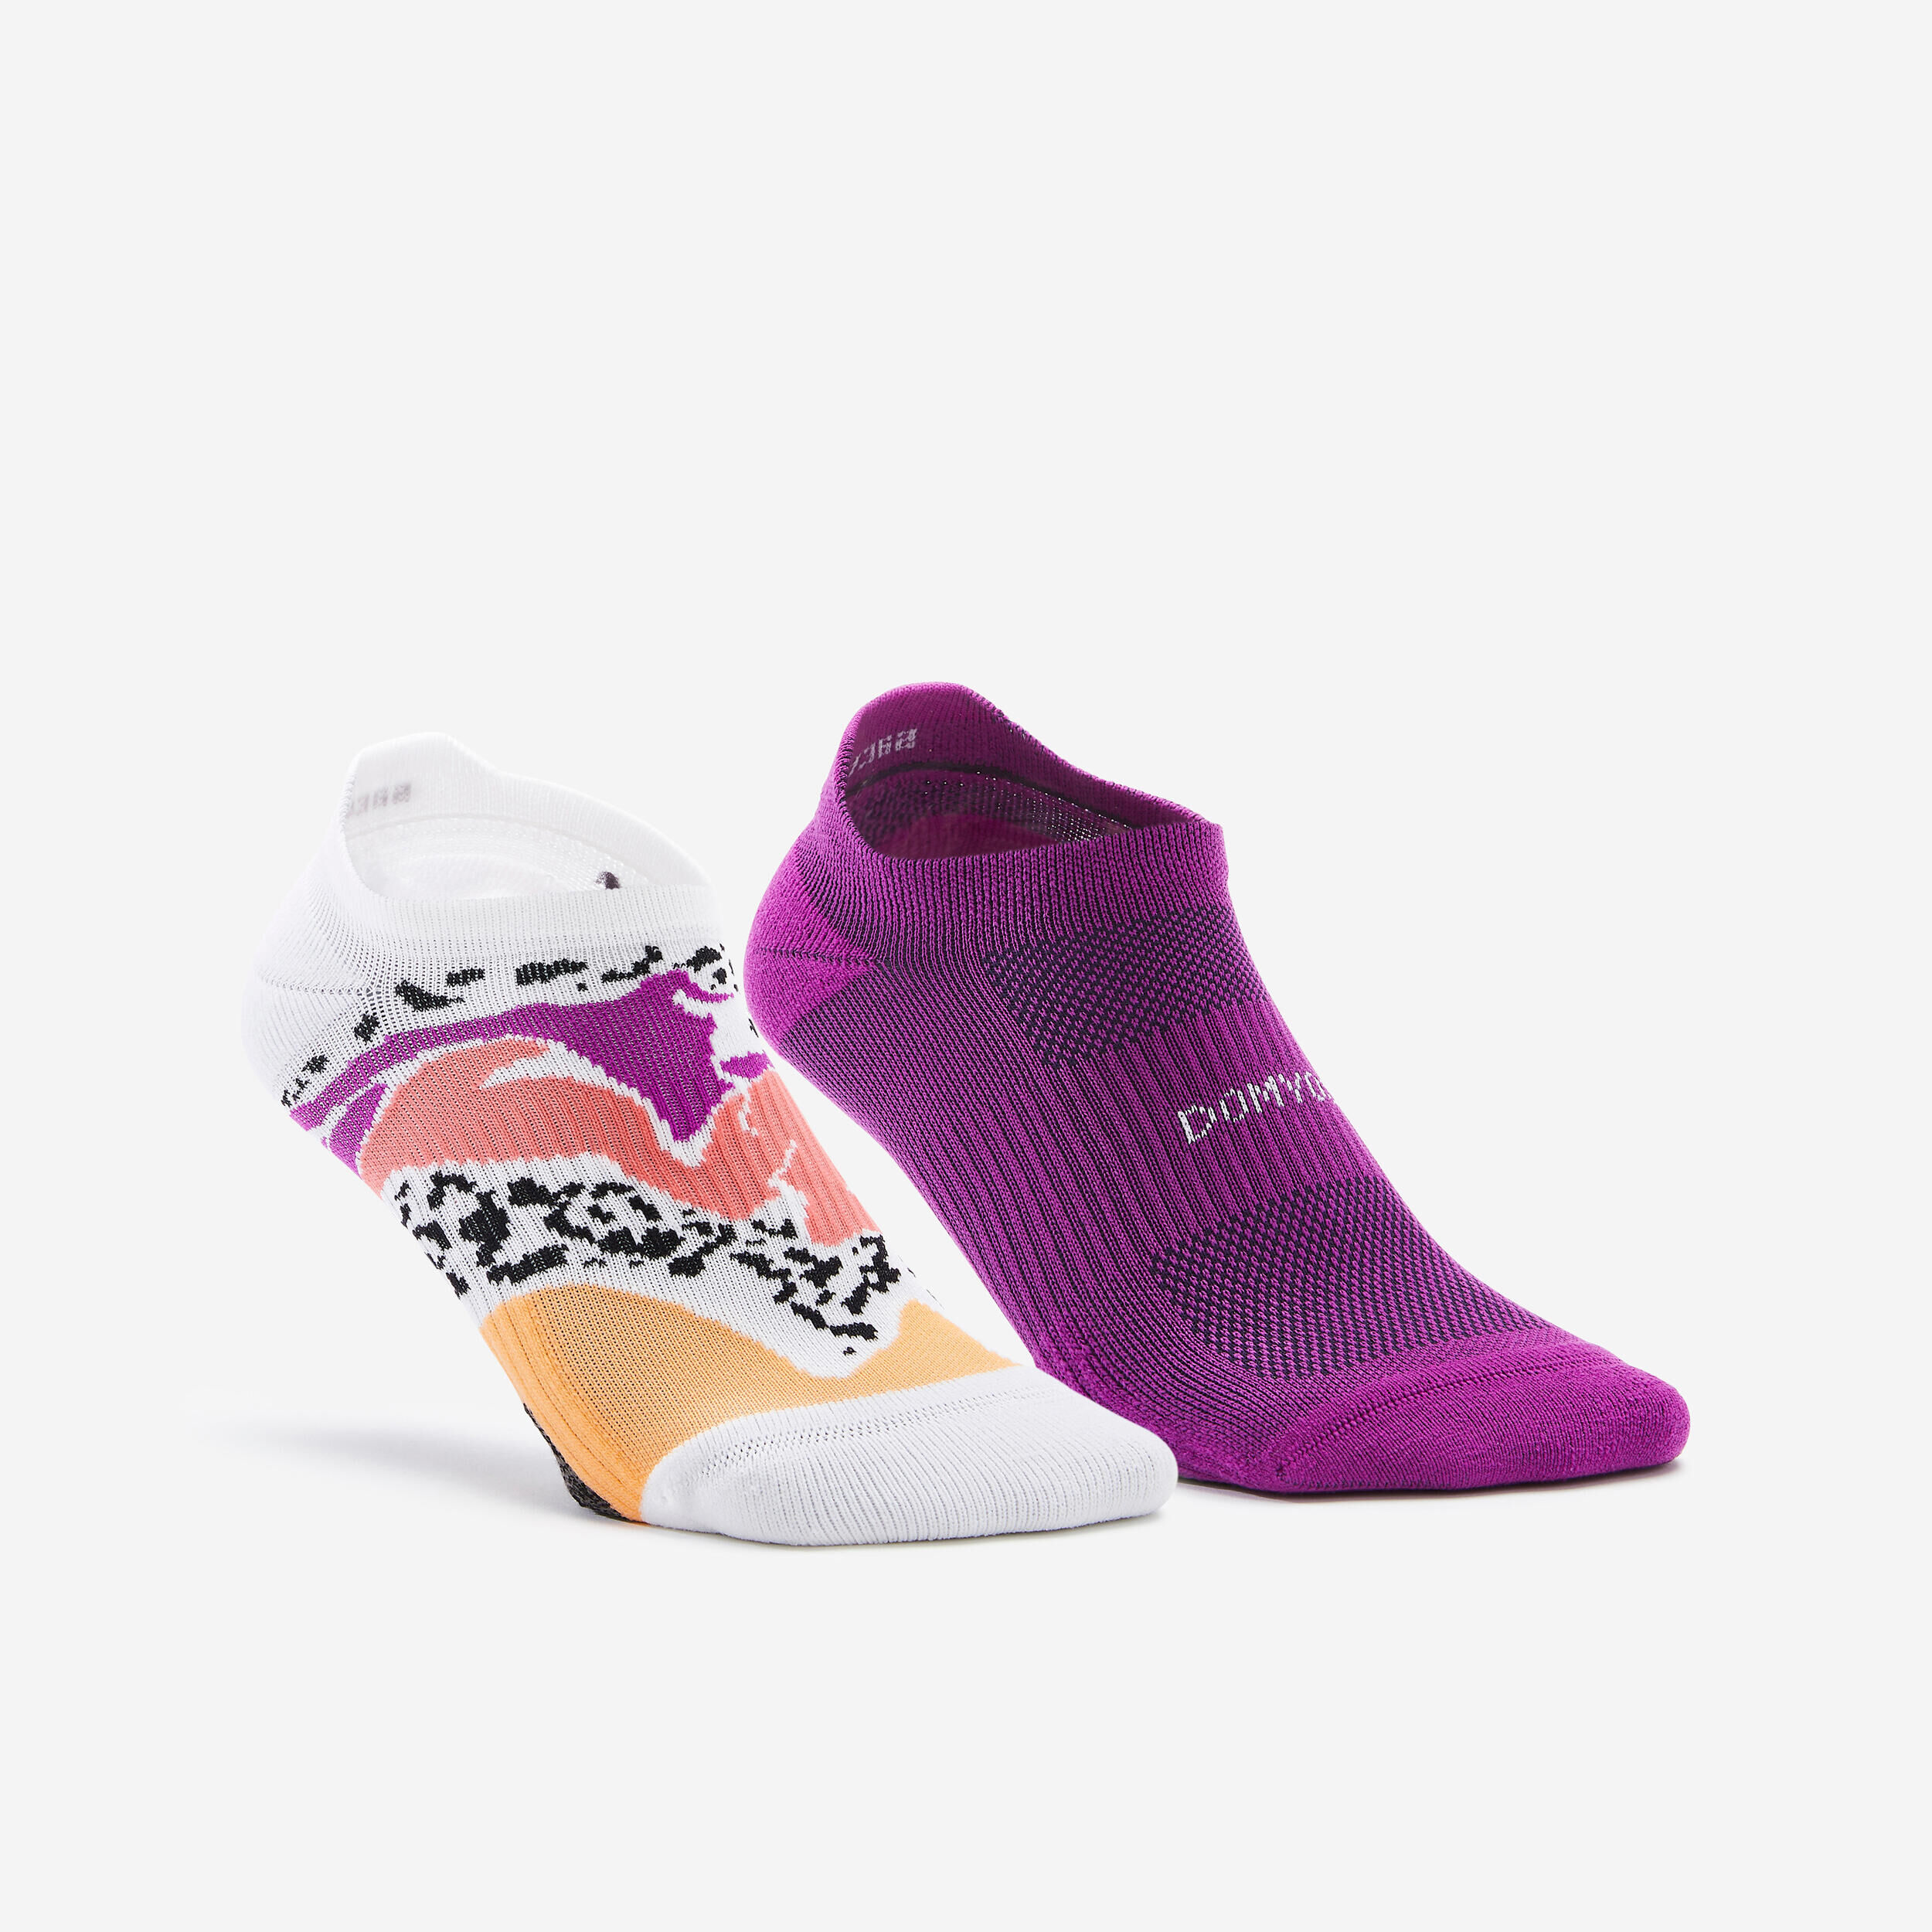 DOMYOS Women's Invisible Socks x 2 - Violet